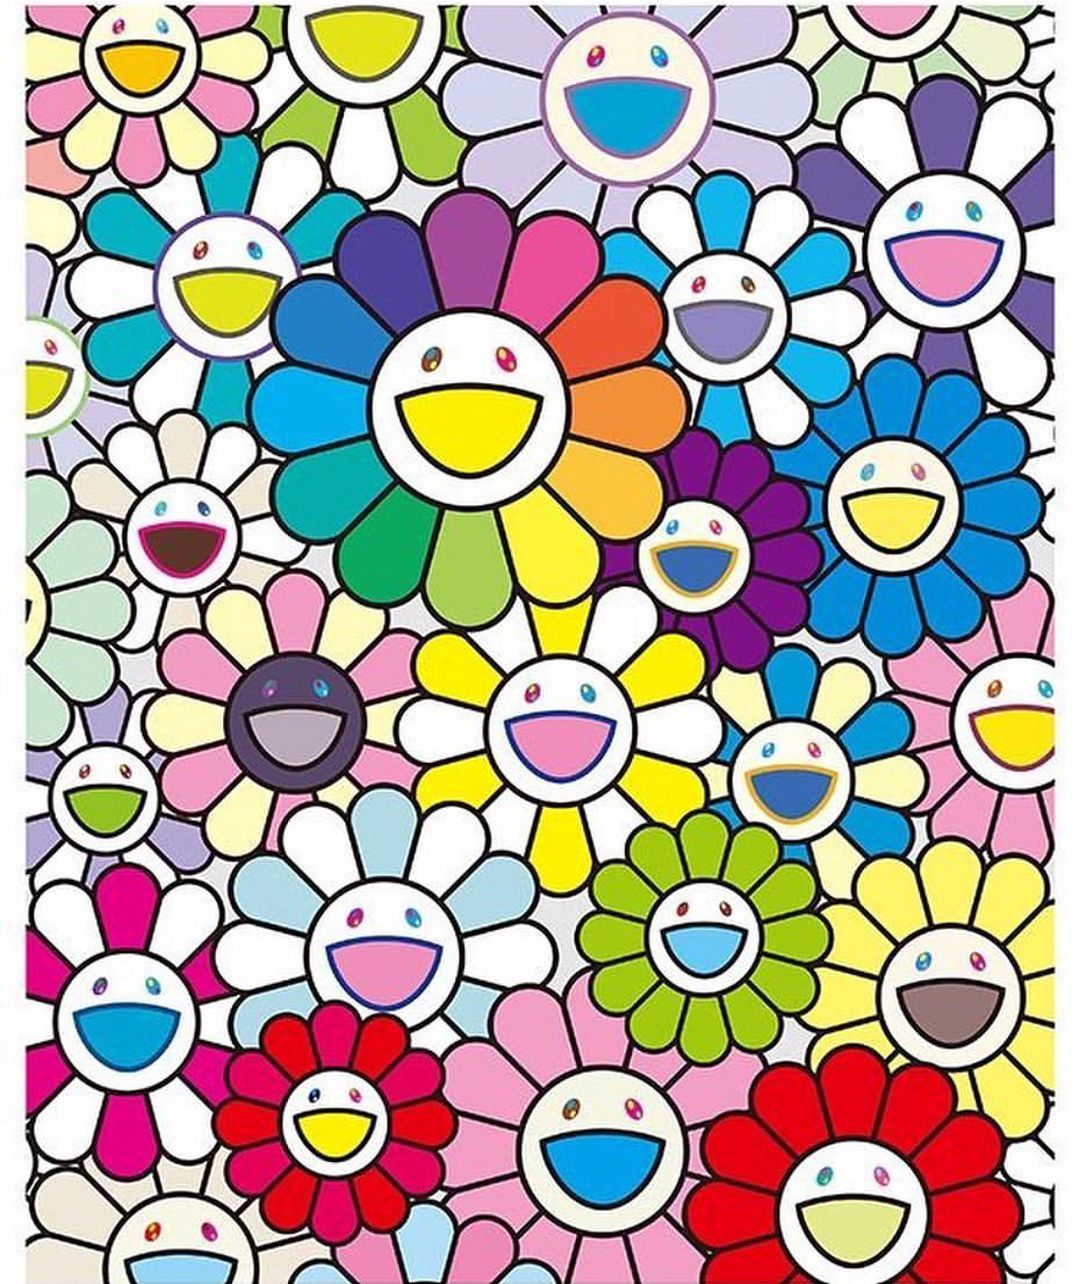 Takashi Murakami on Instagram: “Mark Grotjahn, Takashi Murakami, and Ed Ruscha all have works in the annu. Takashi murakami art, Takashi murakami, Murakami flower